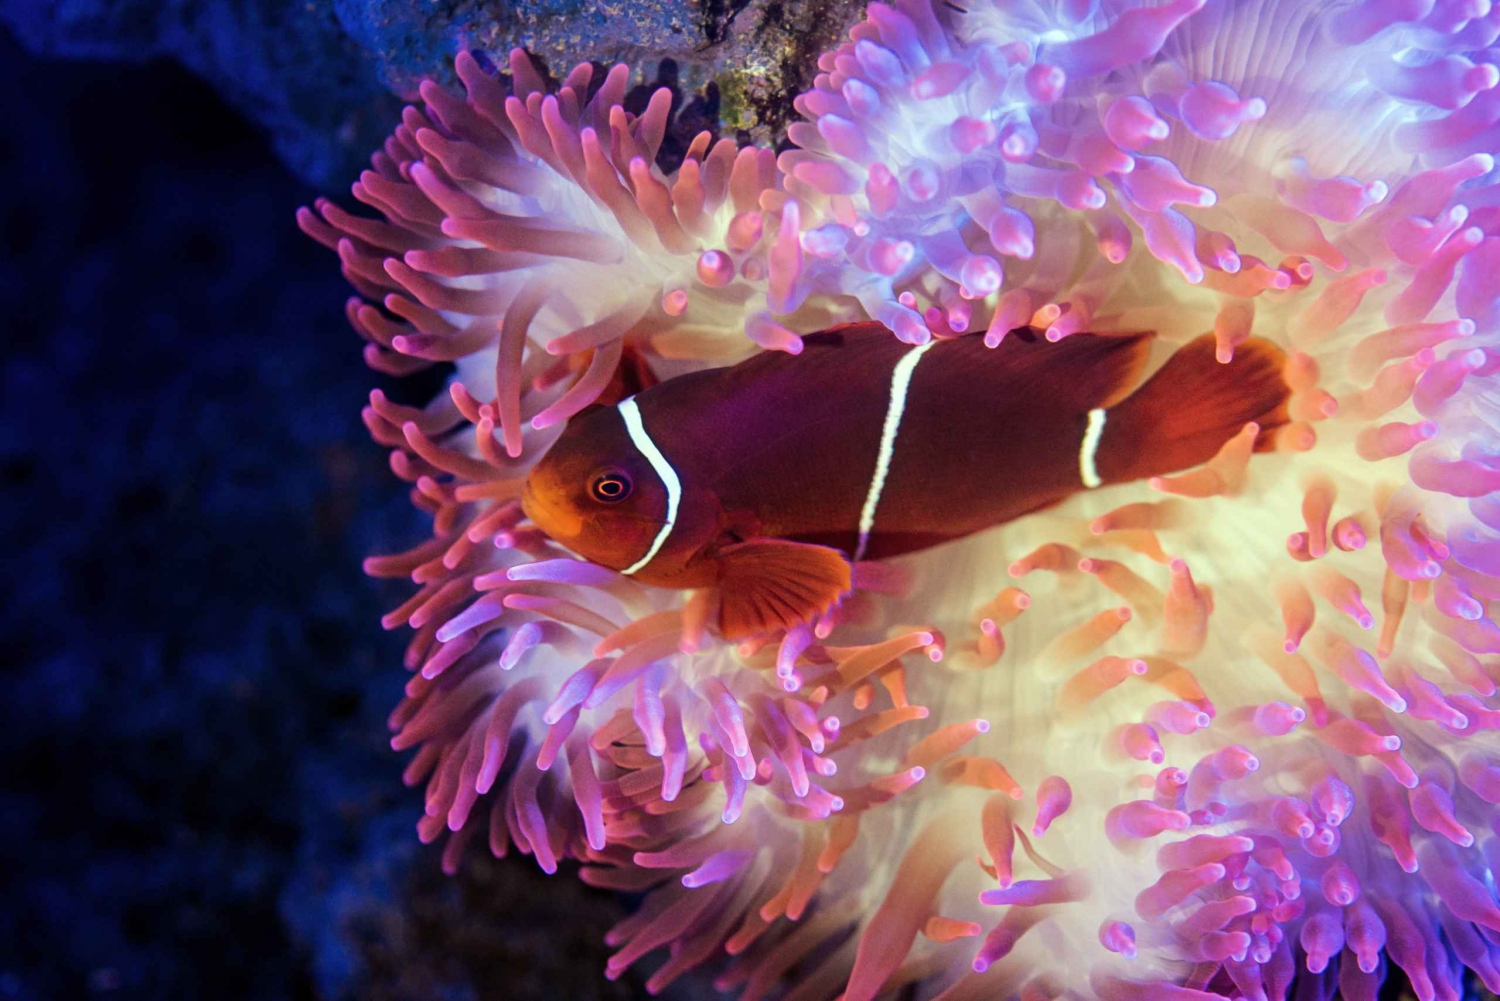 Cairns: Guided Twilight Tour of the Aquarium